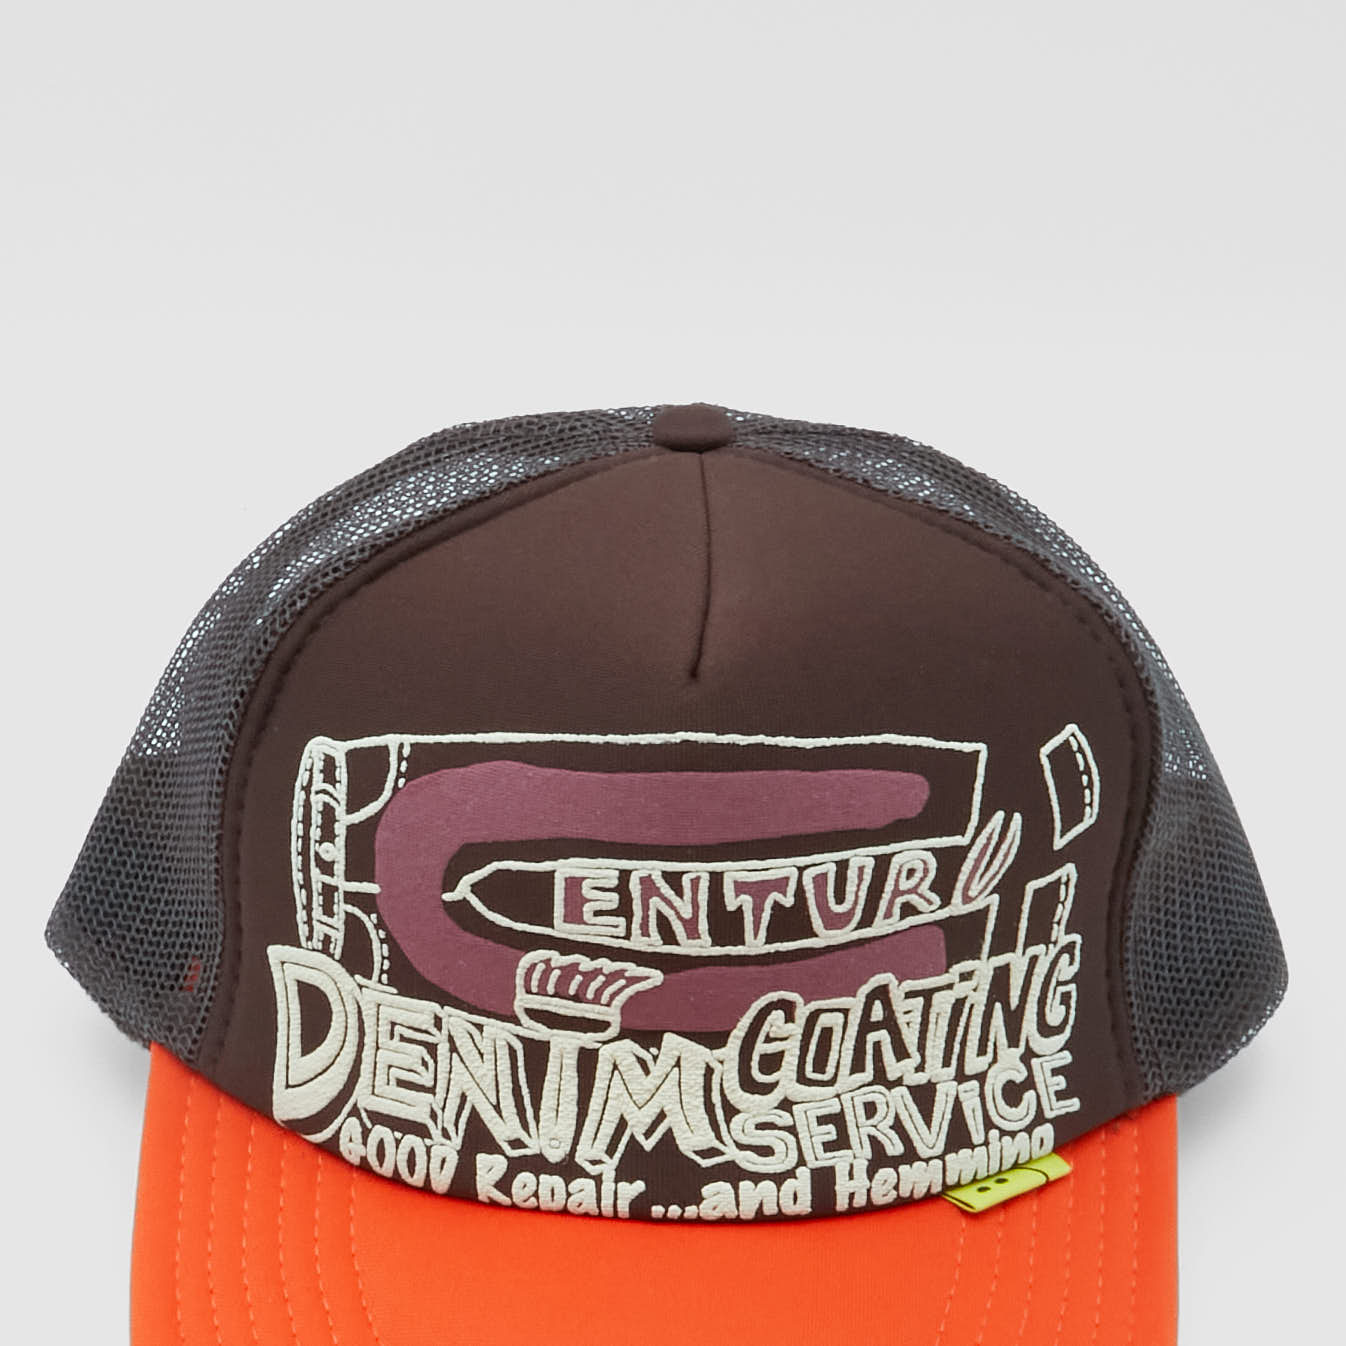 Kapital Century Denim Trucker Hat